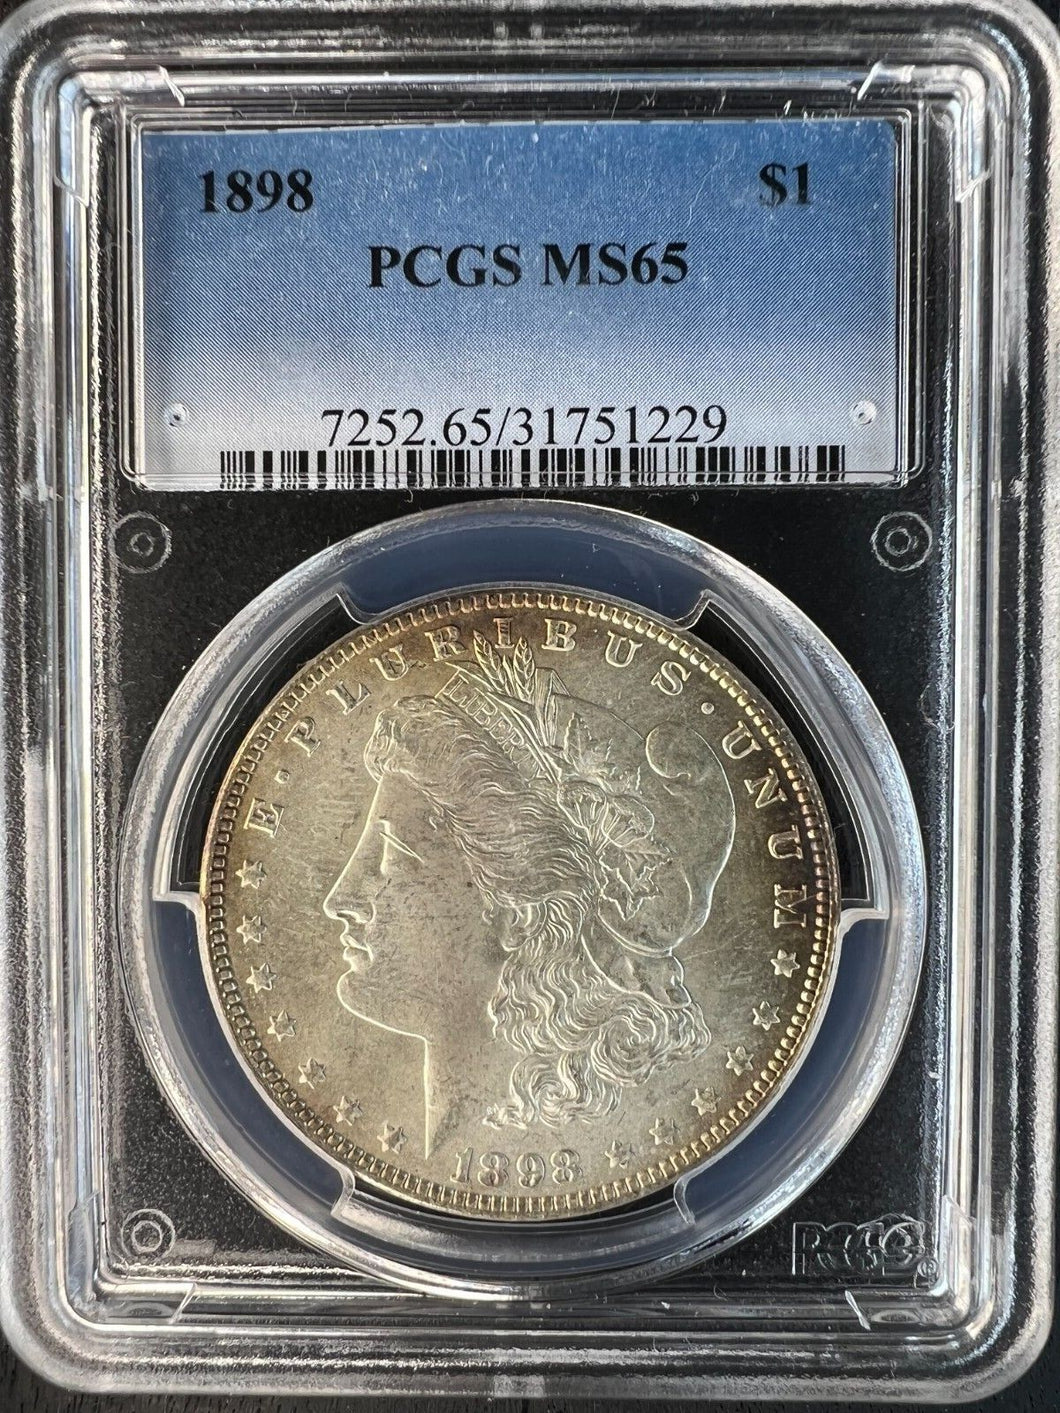 1898-P Morgan Silver Dollar PCGS MS65 - White Coin w/ Some Peripheral Rim Toning